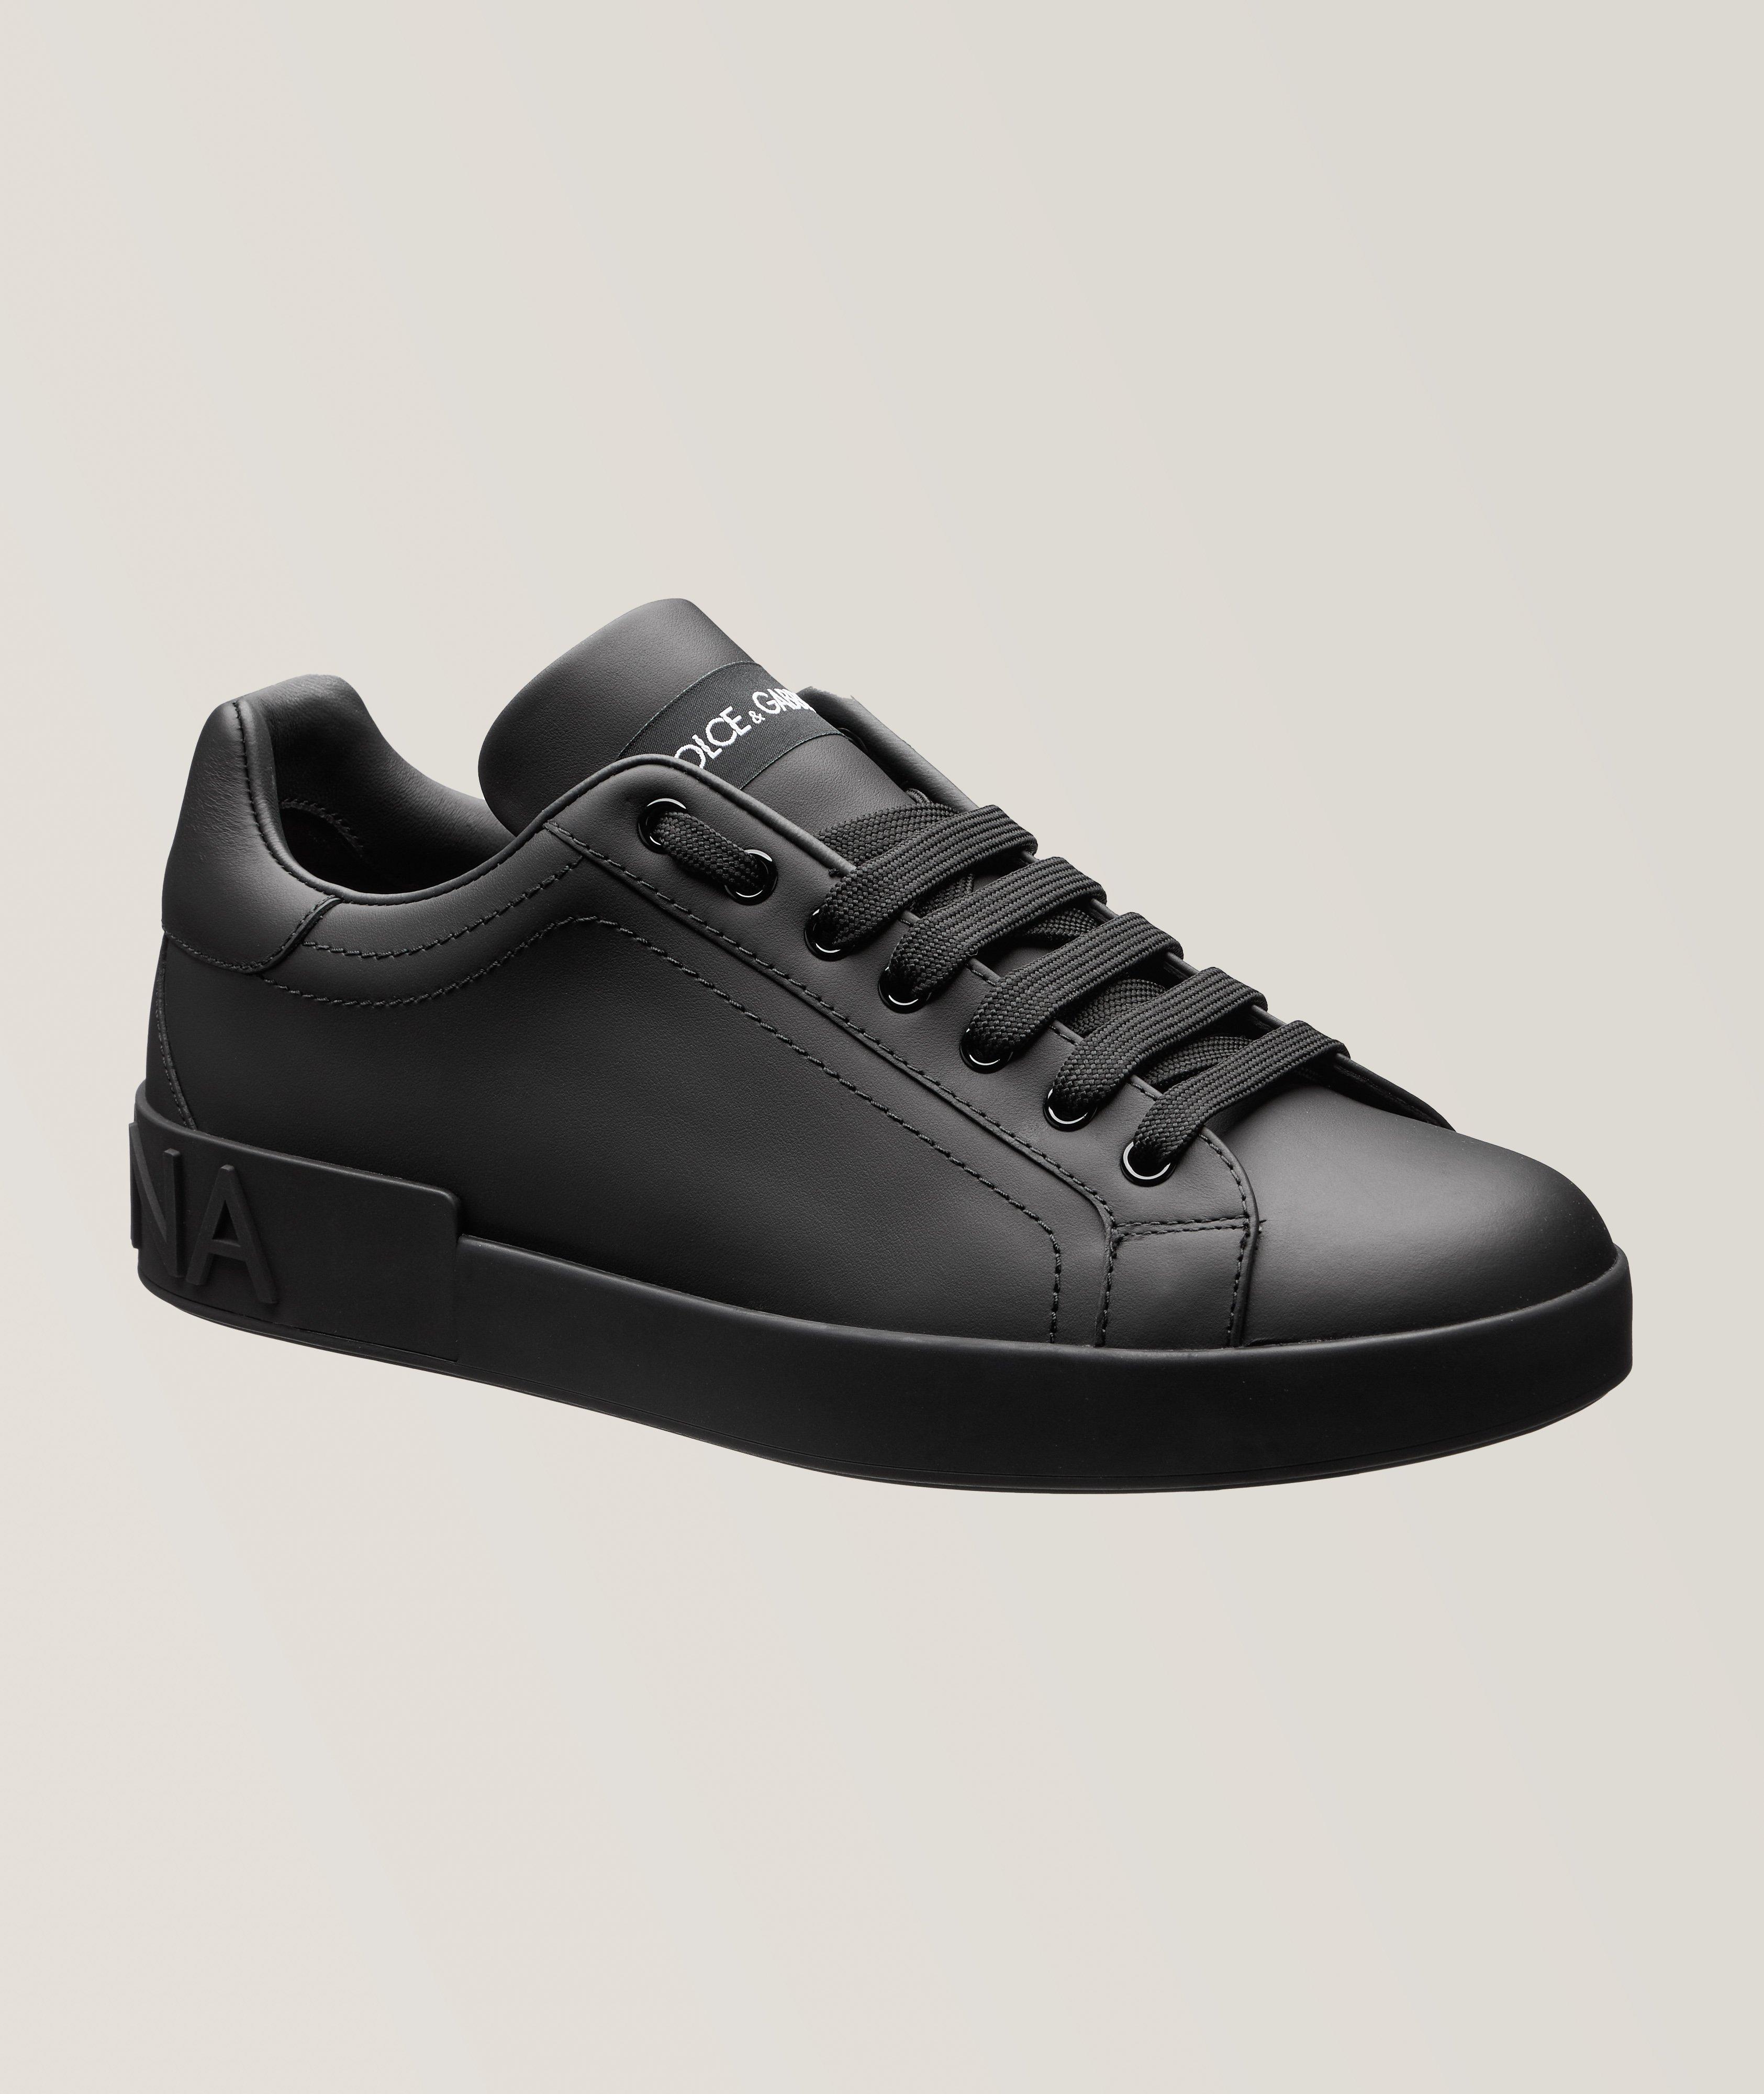 Portofino Leather Sneakers image 0